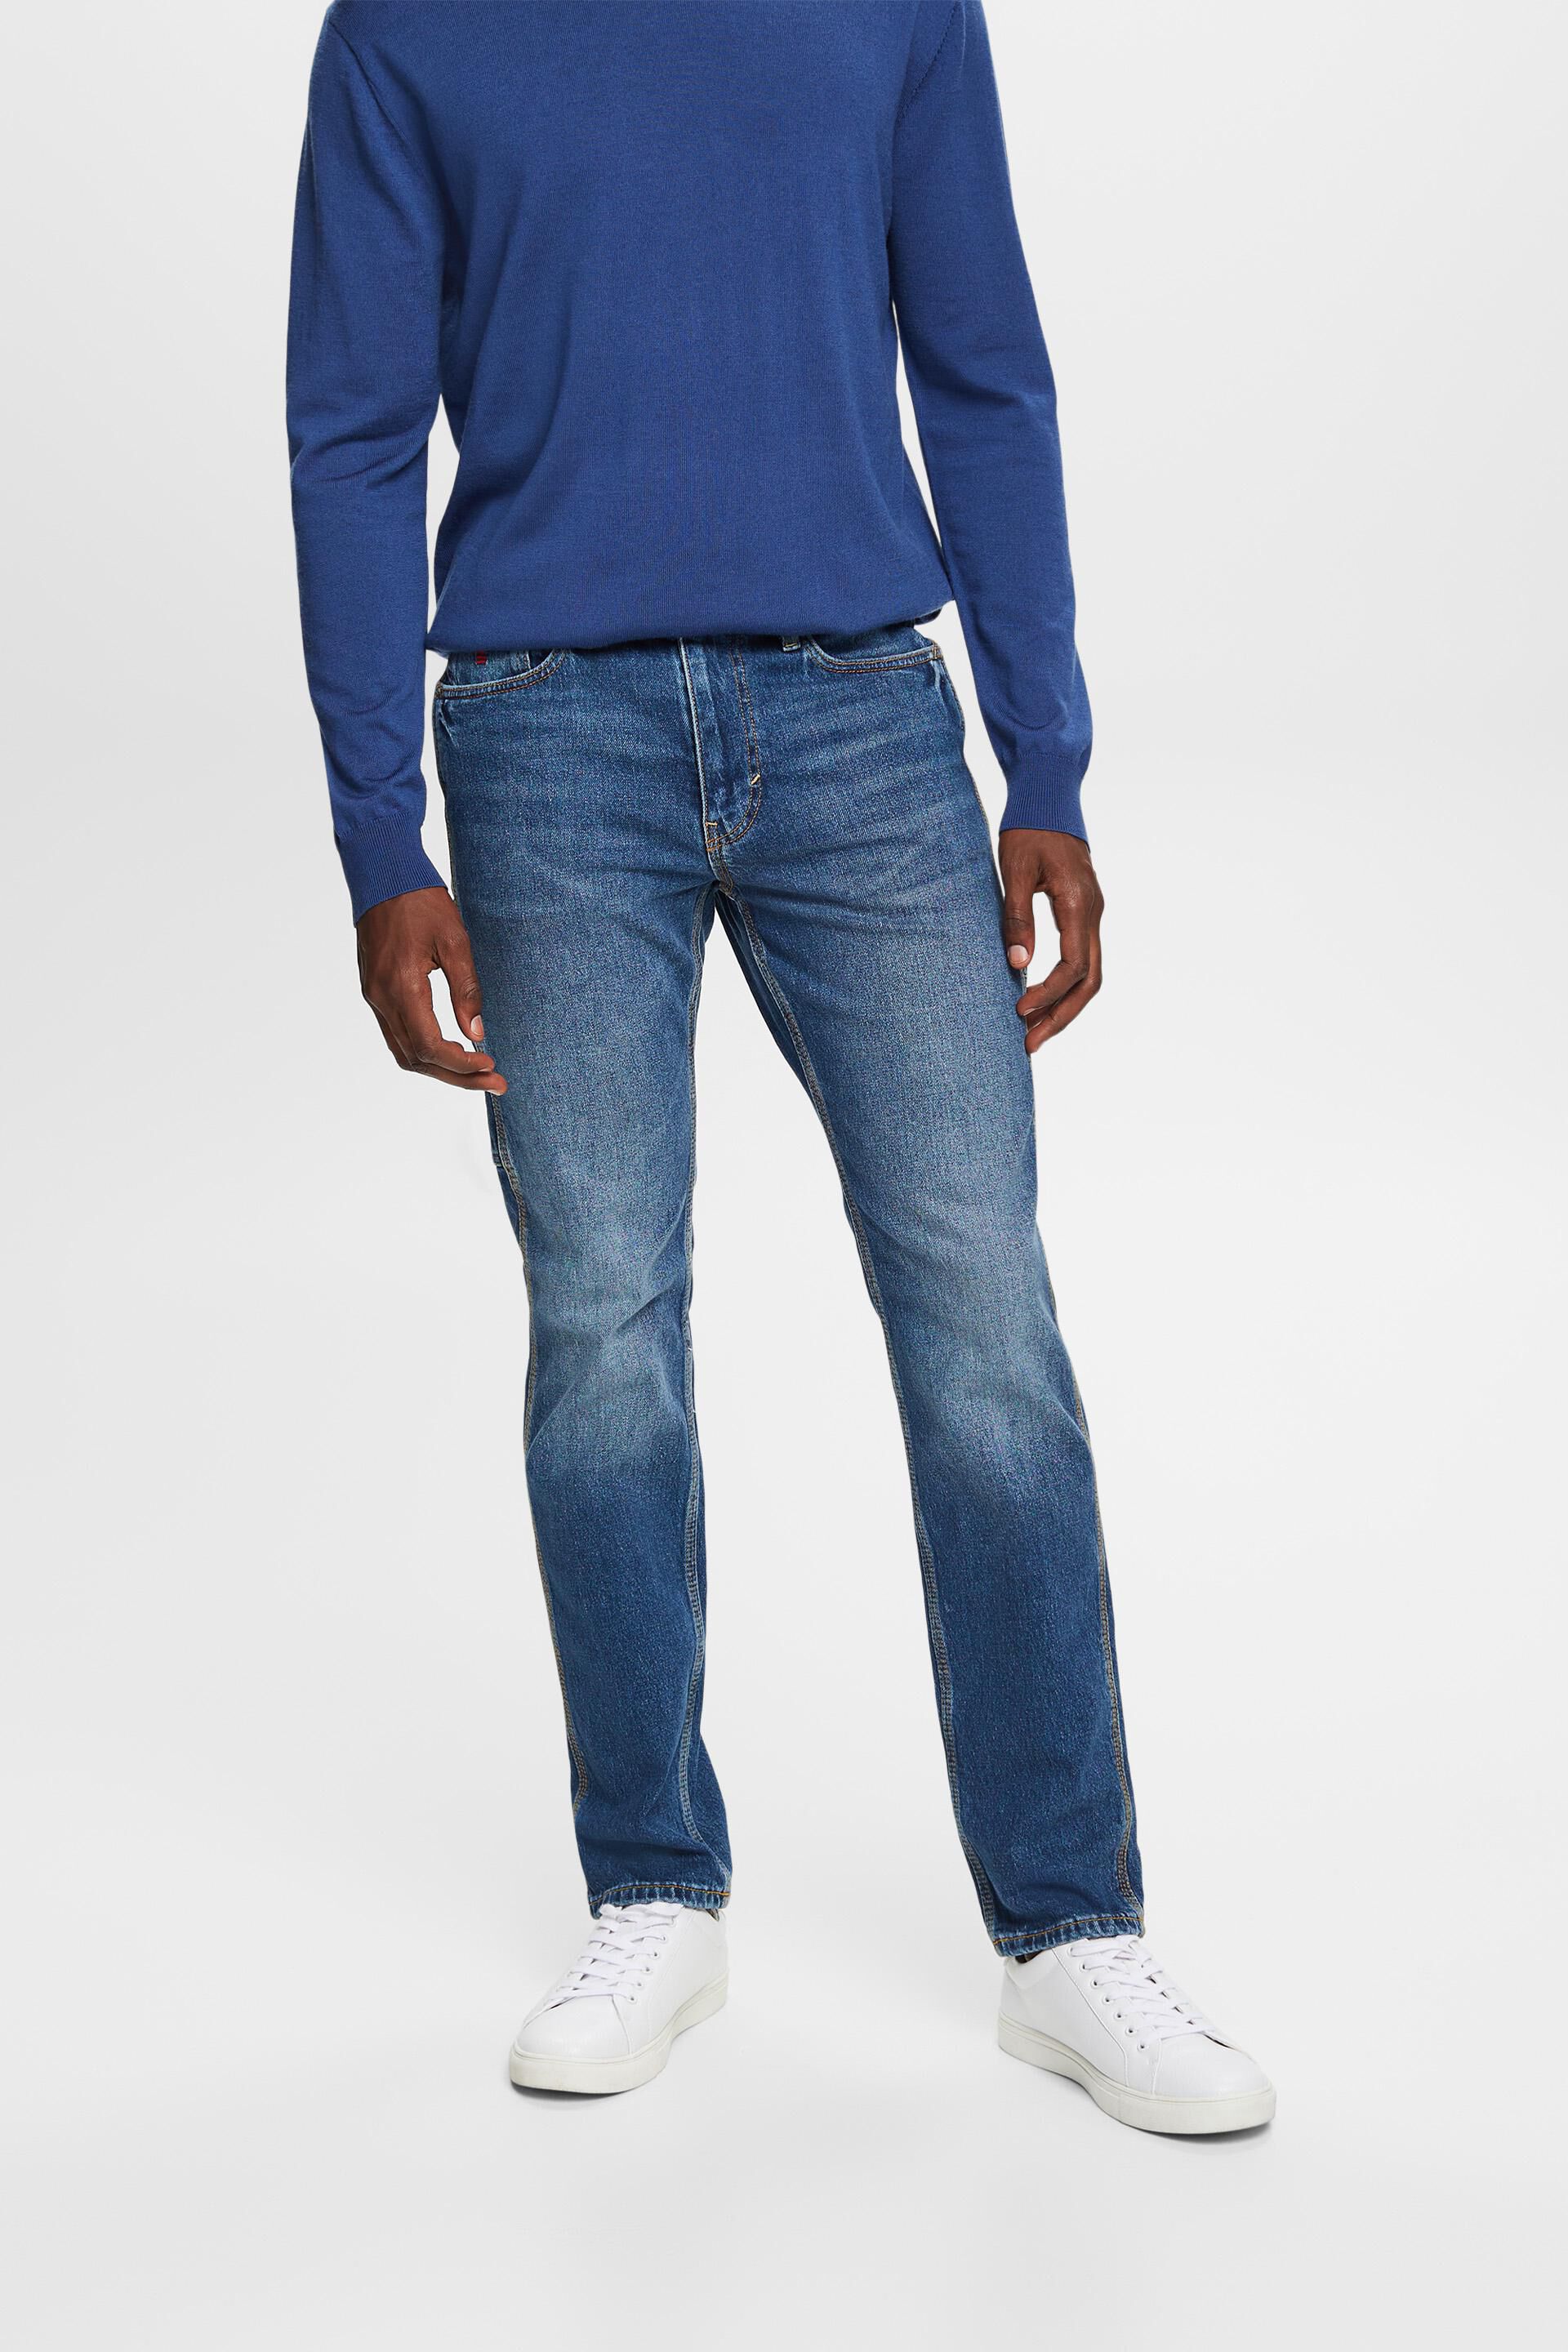 Esprit jeans fit Carpenter straight